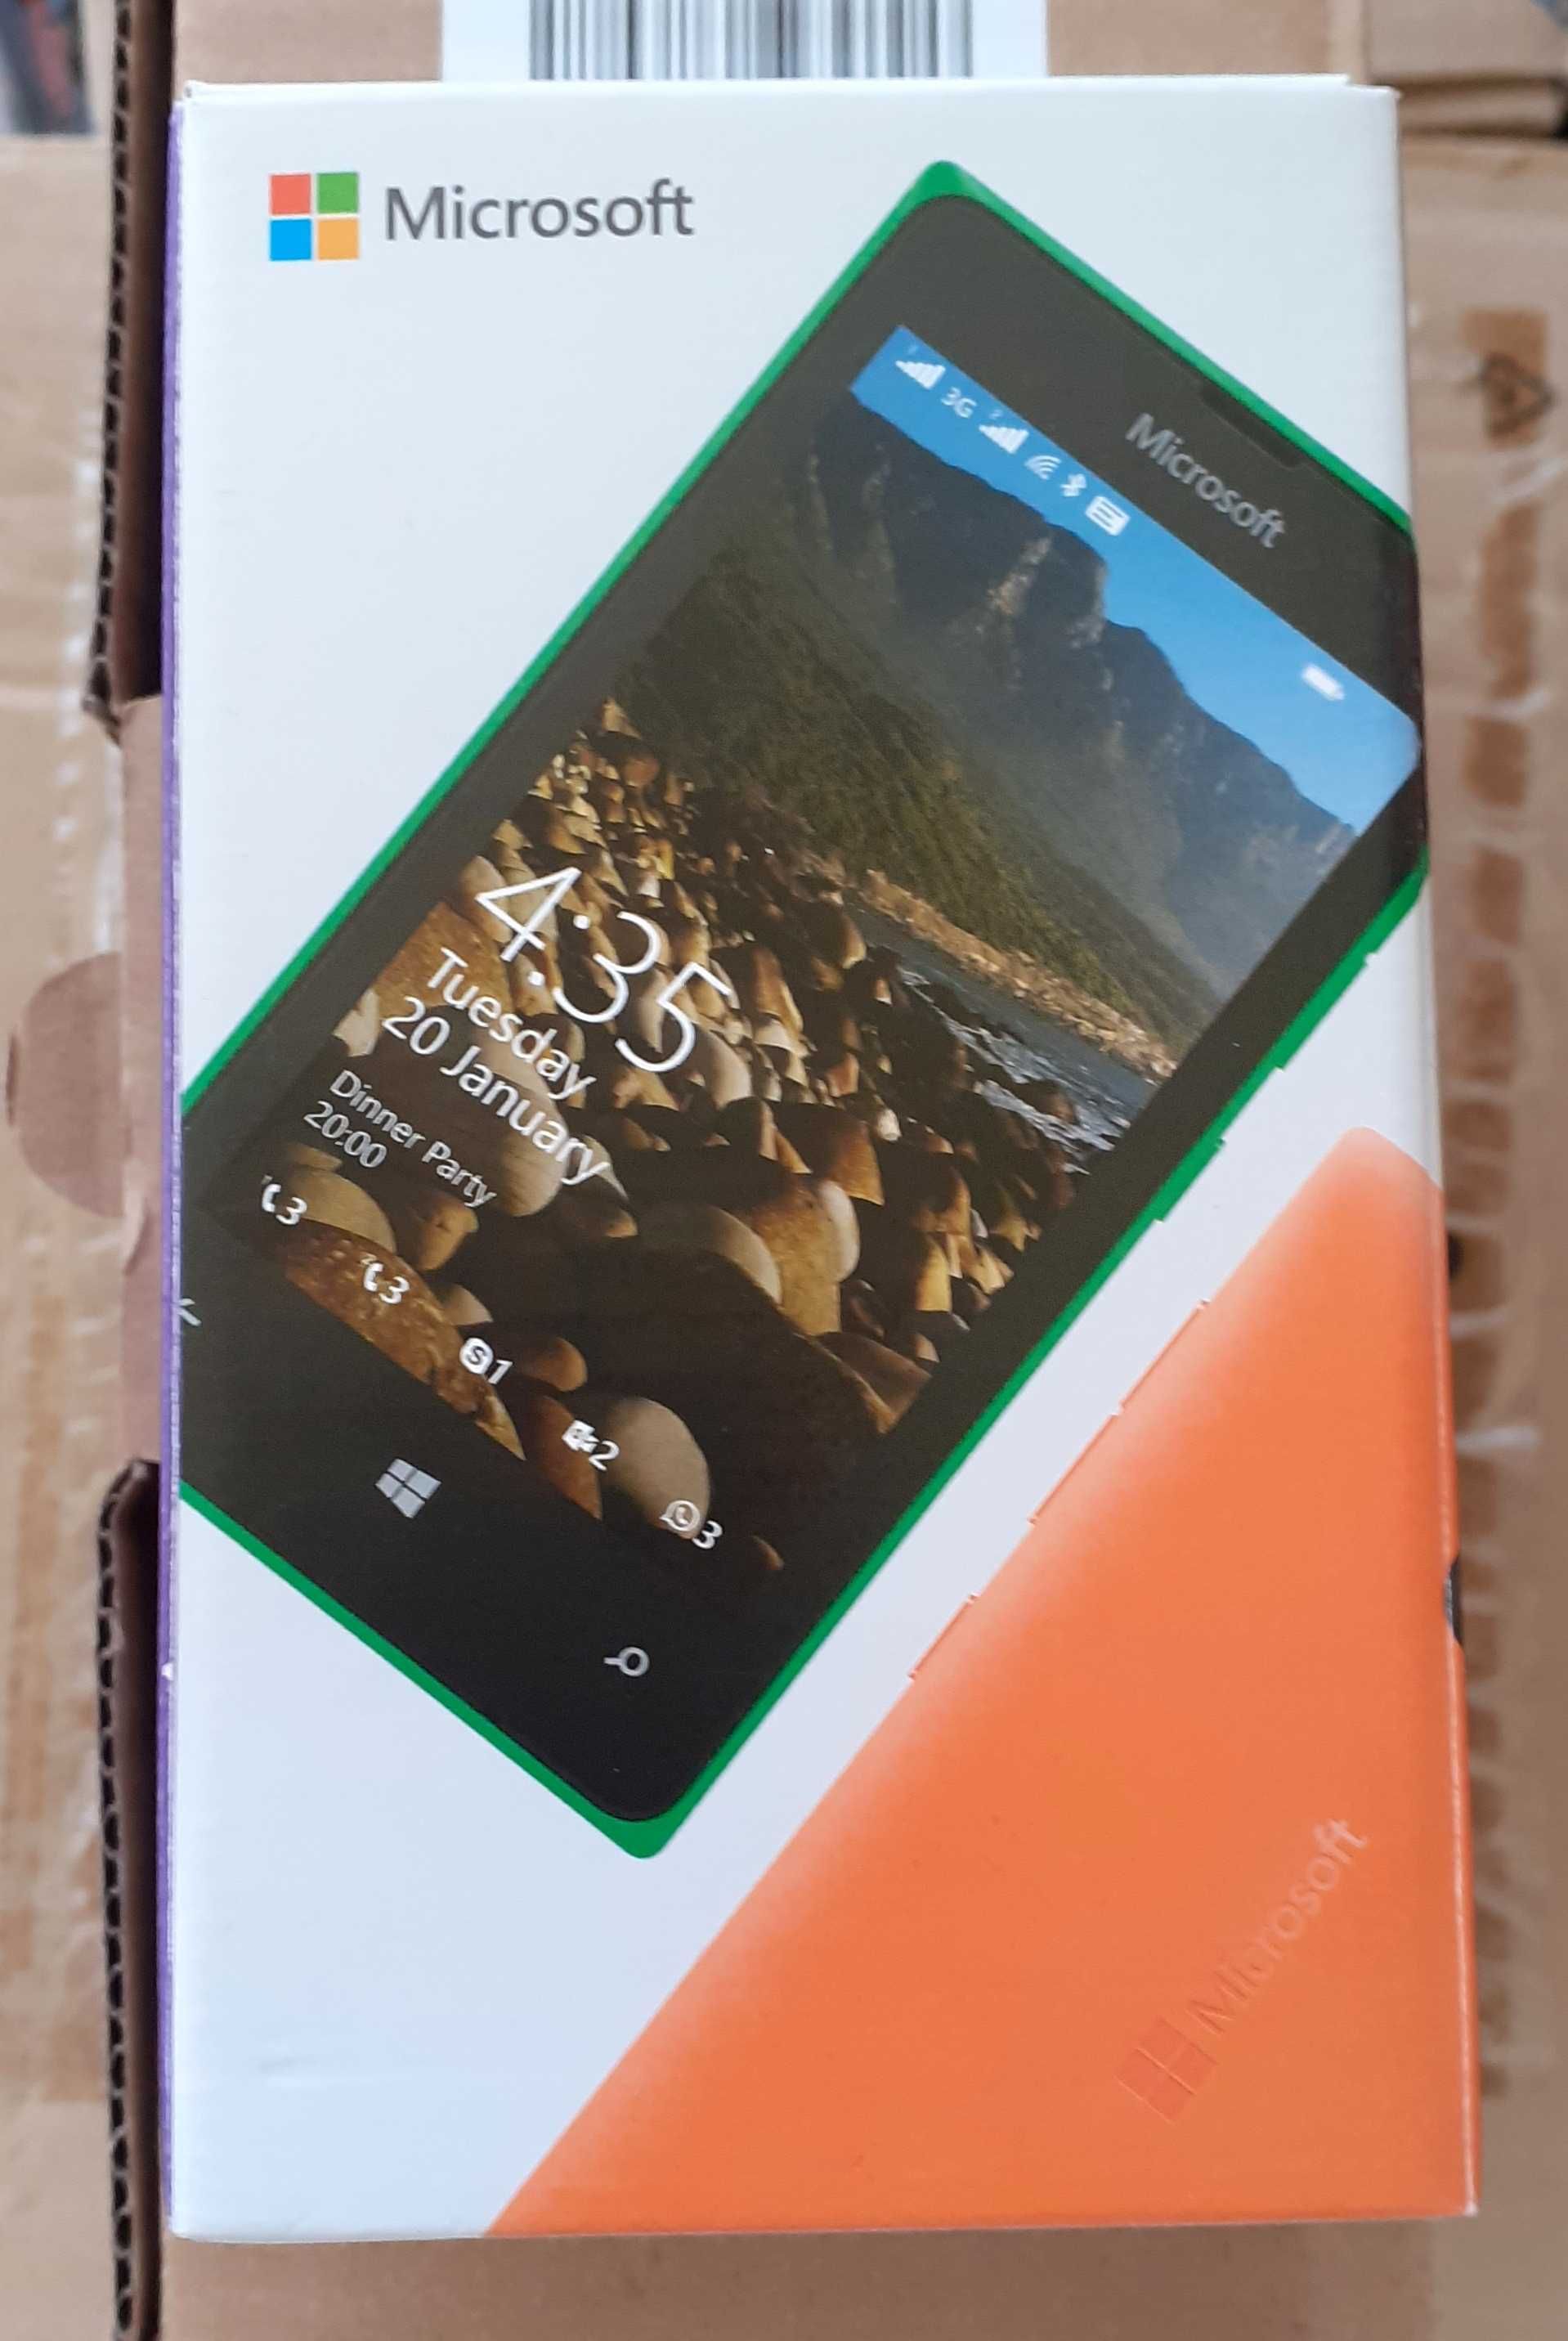 Microsoft Lumia dual sim